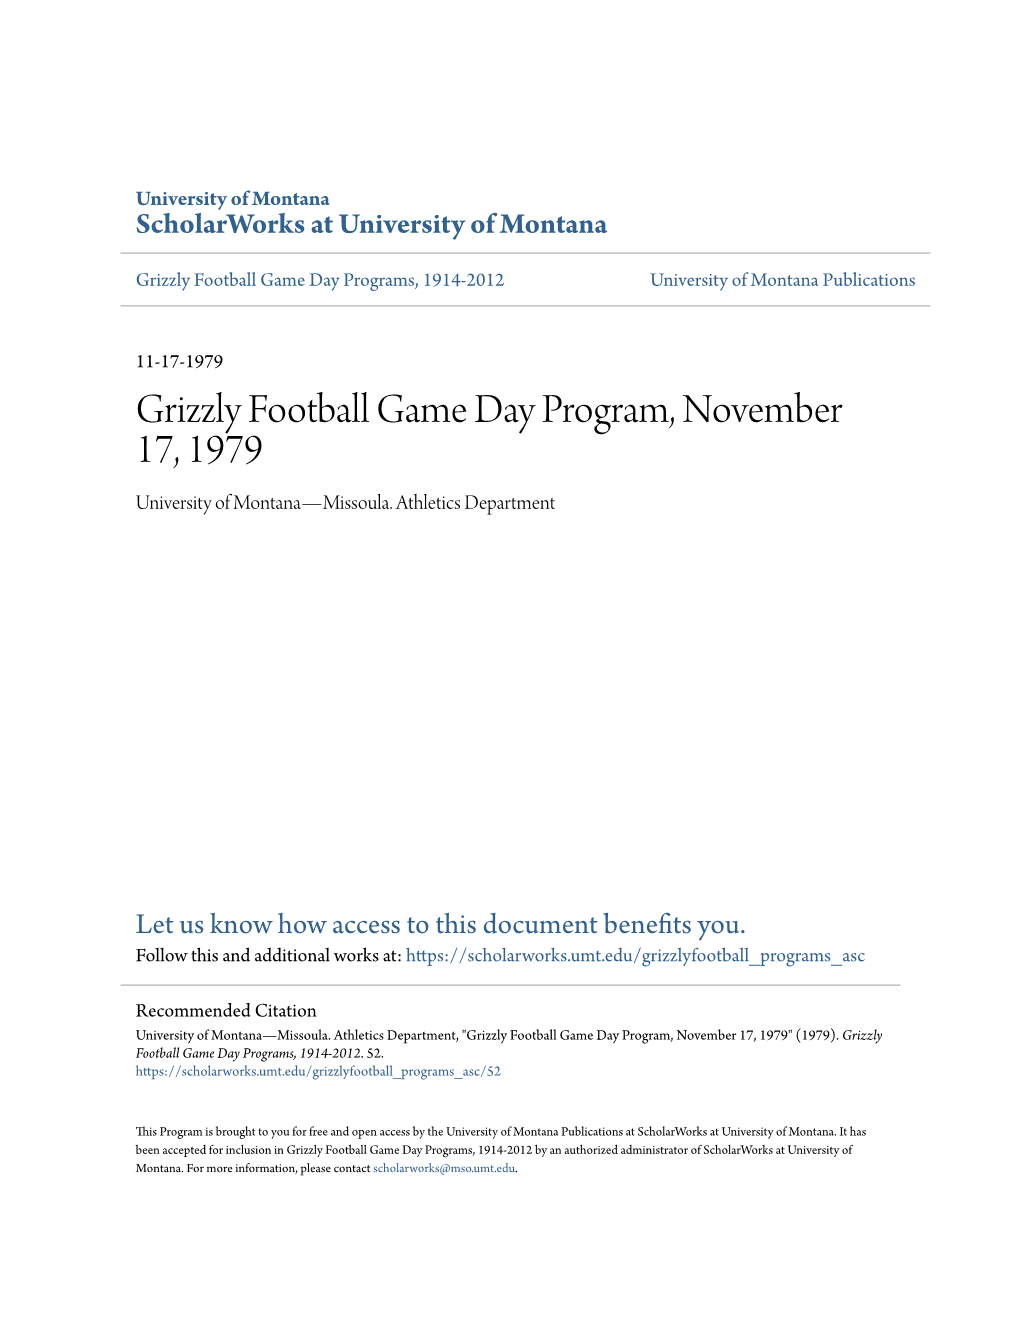 Grizzly Football Game Day Program, November 17, 1979 University of Montana—Missoula